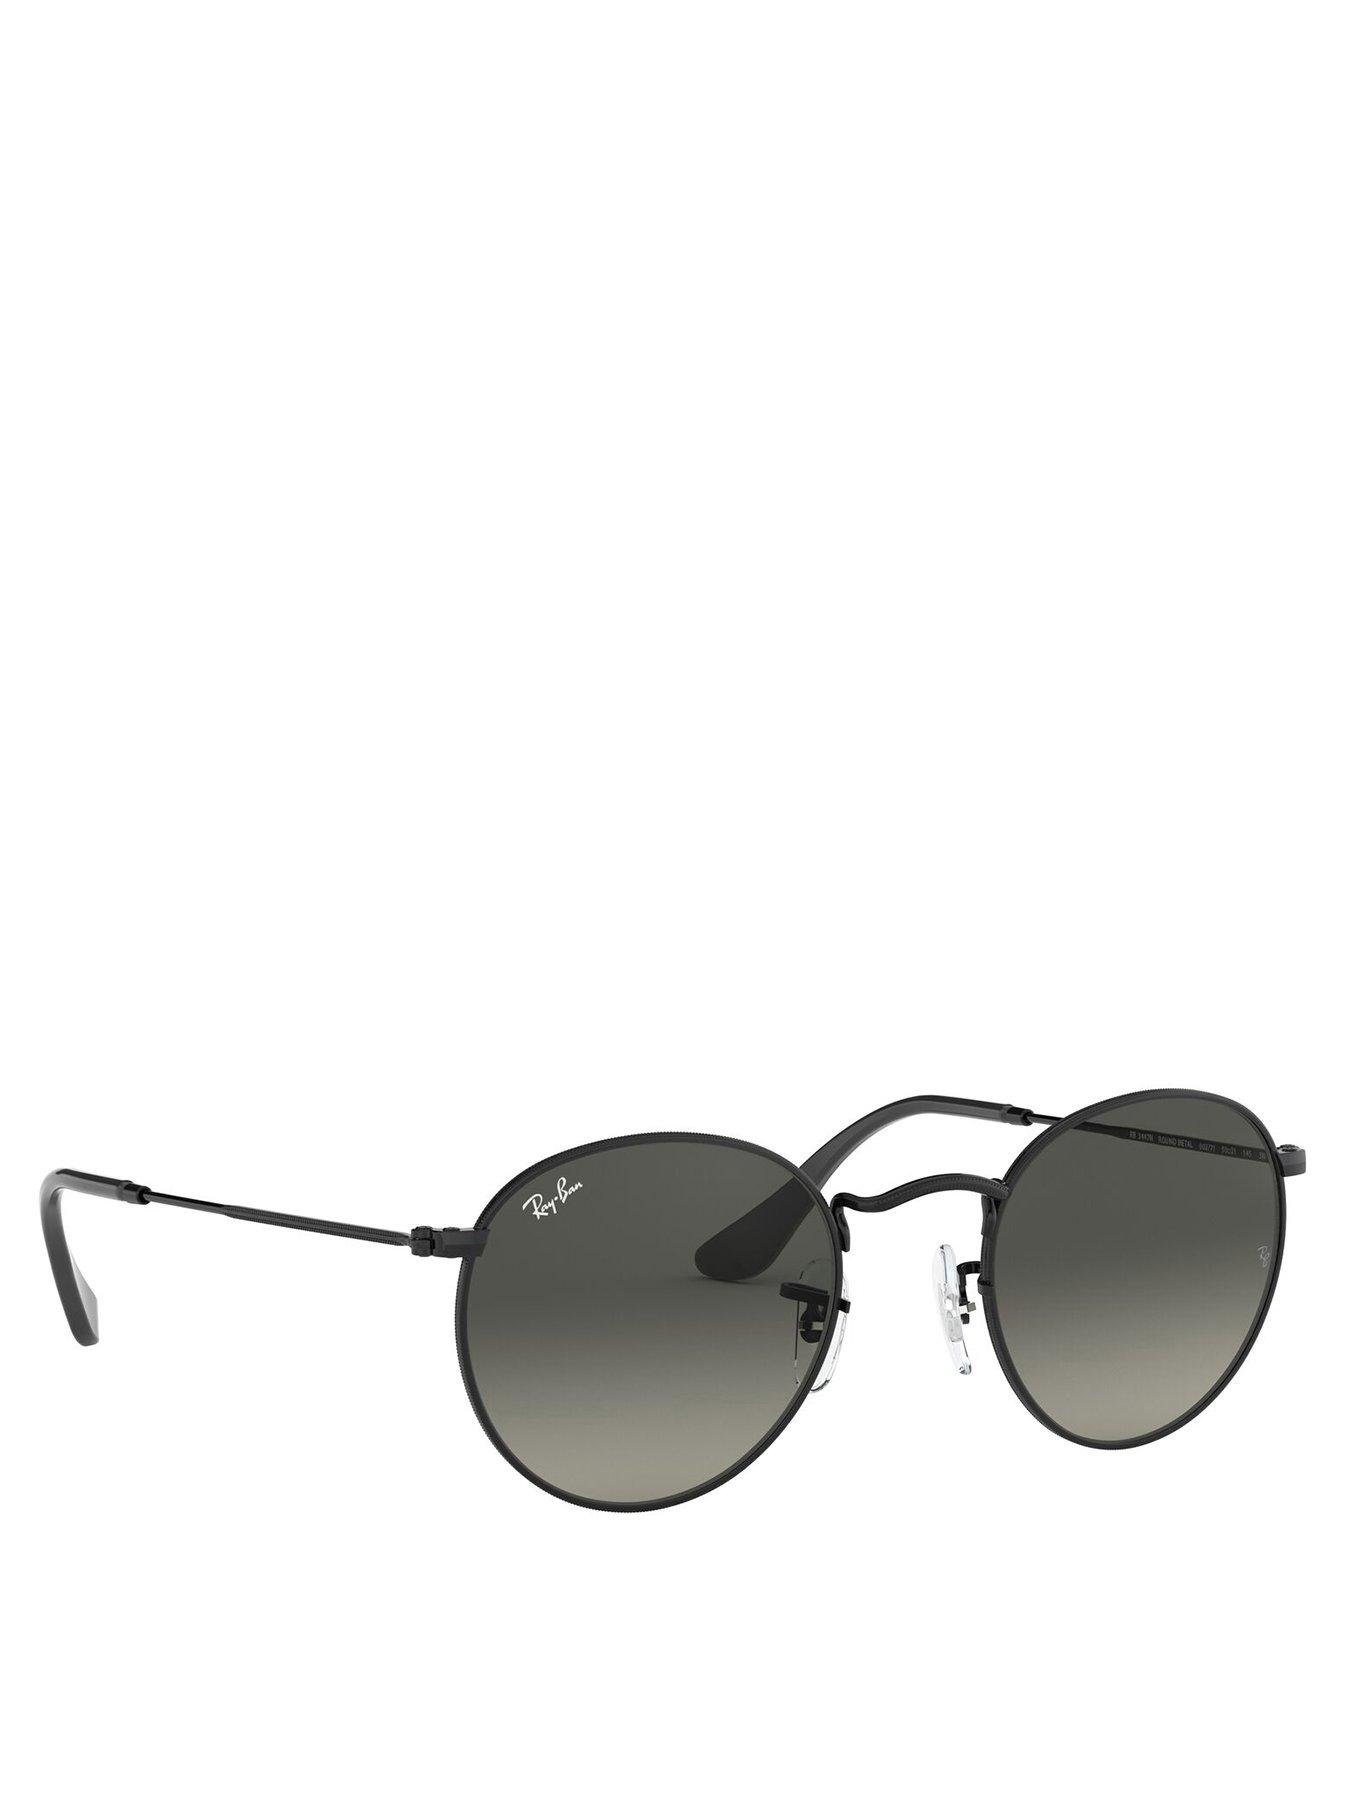 Accessories Round Metal Frame Lens Sunglasses - Black